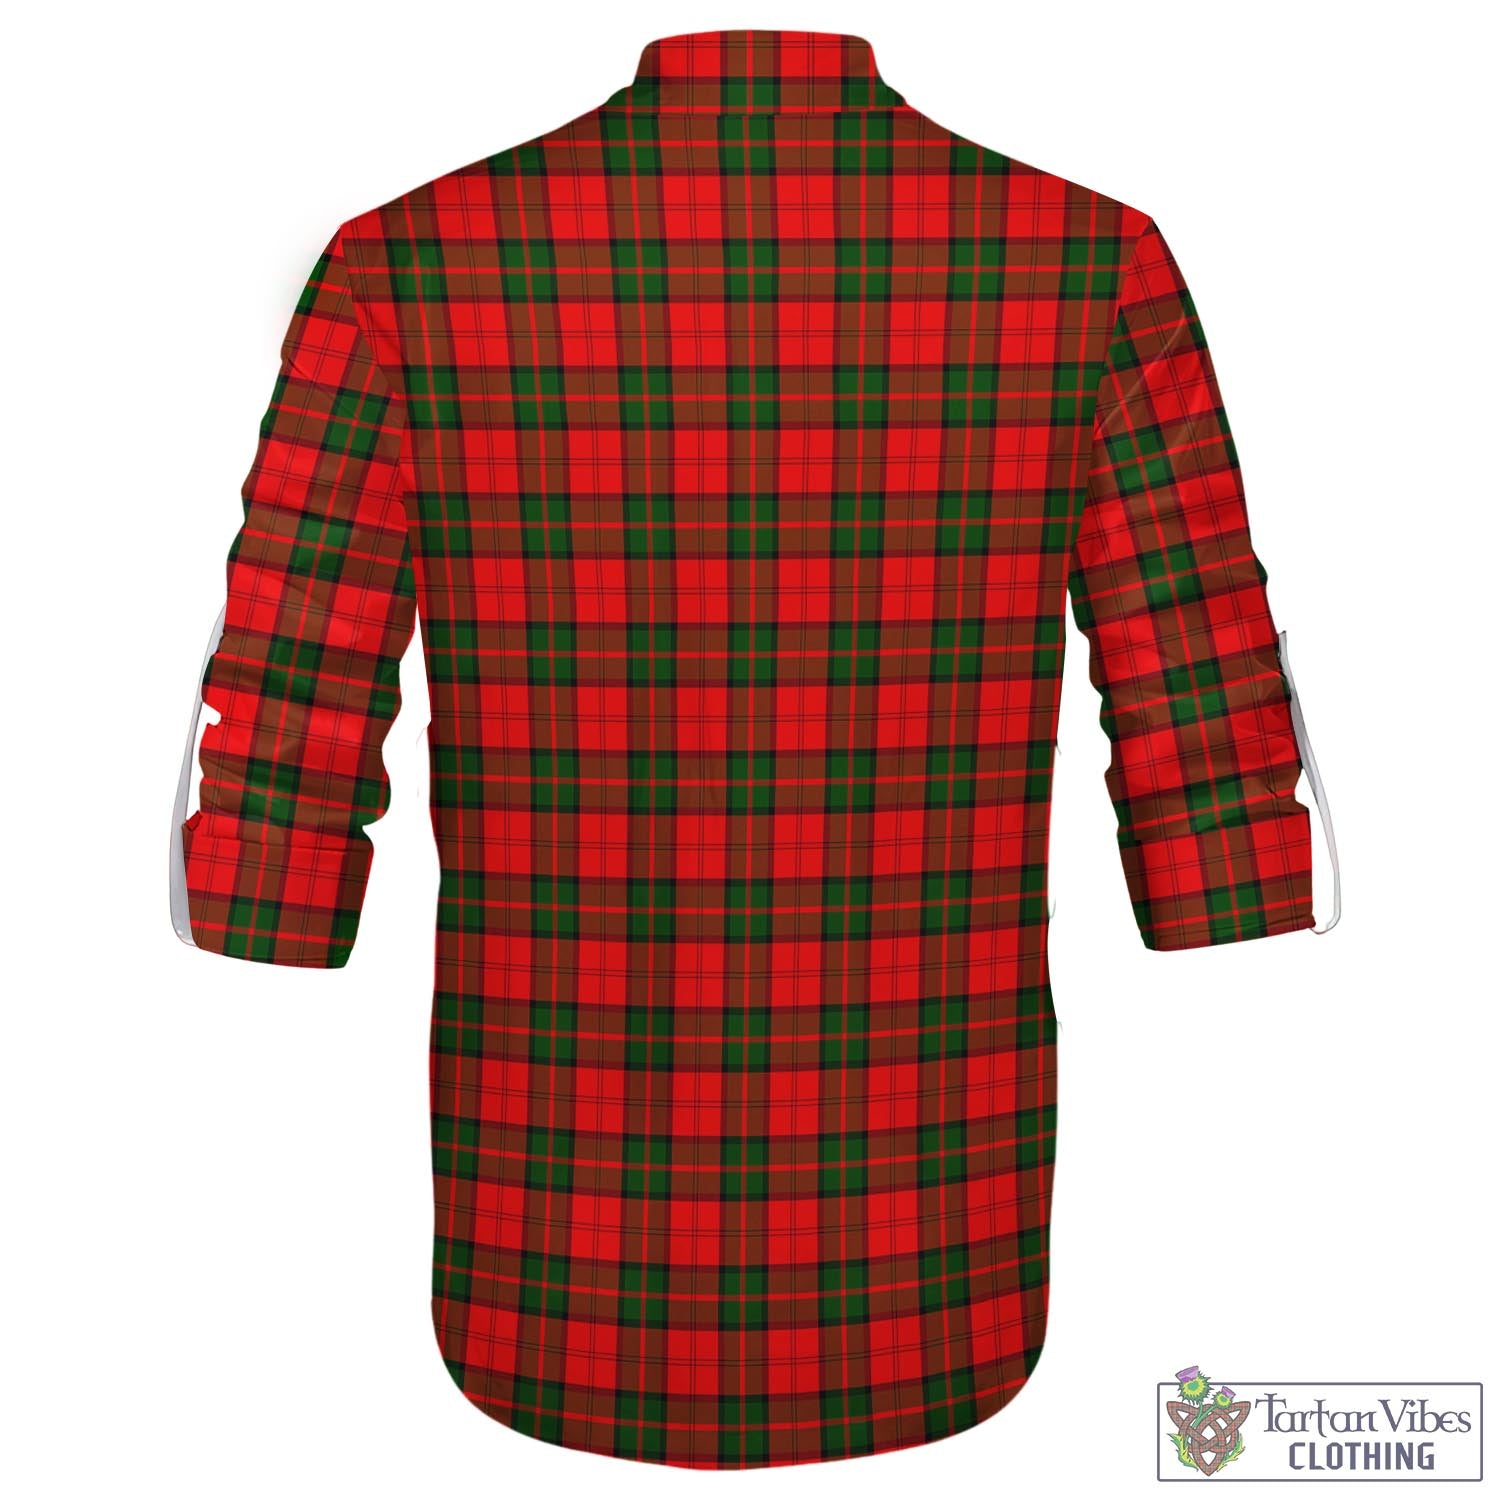 Tartan Vibes Clothing Dunbar Modern Tartan Men's Scottish Traditional Jacobite Ghillie Kilt Shirt